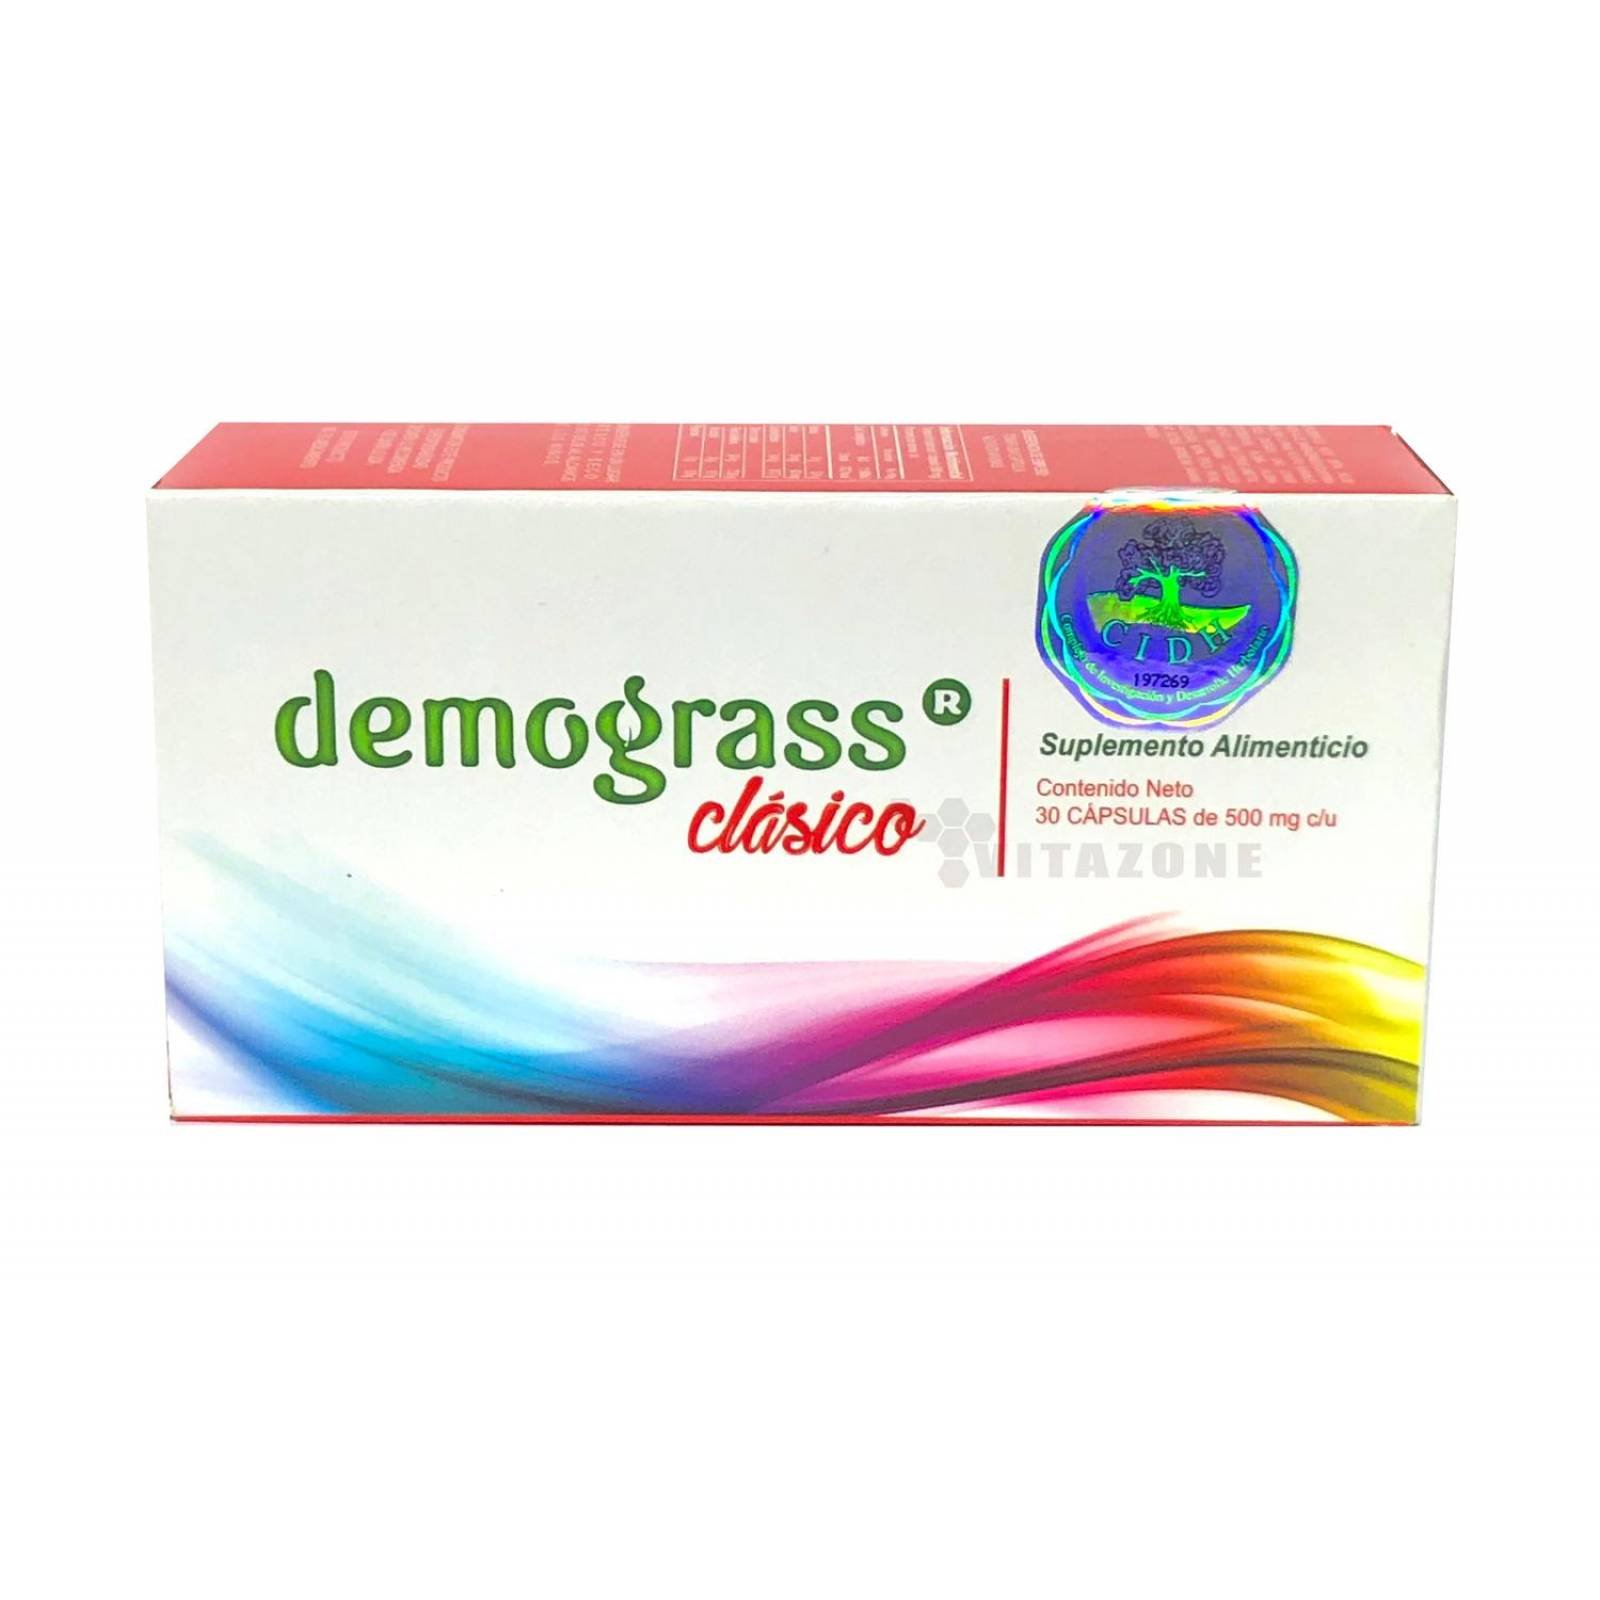 Demograss Clásico y demograss Plus 30 cápsulas c/u (2 Cajas) 